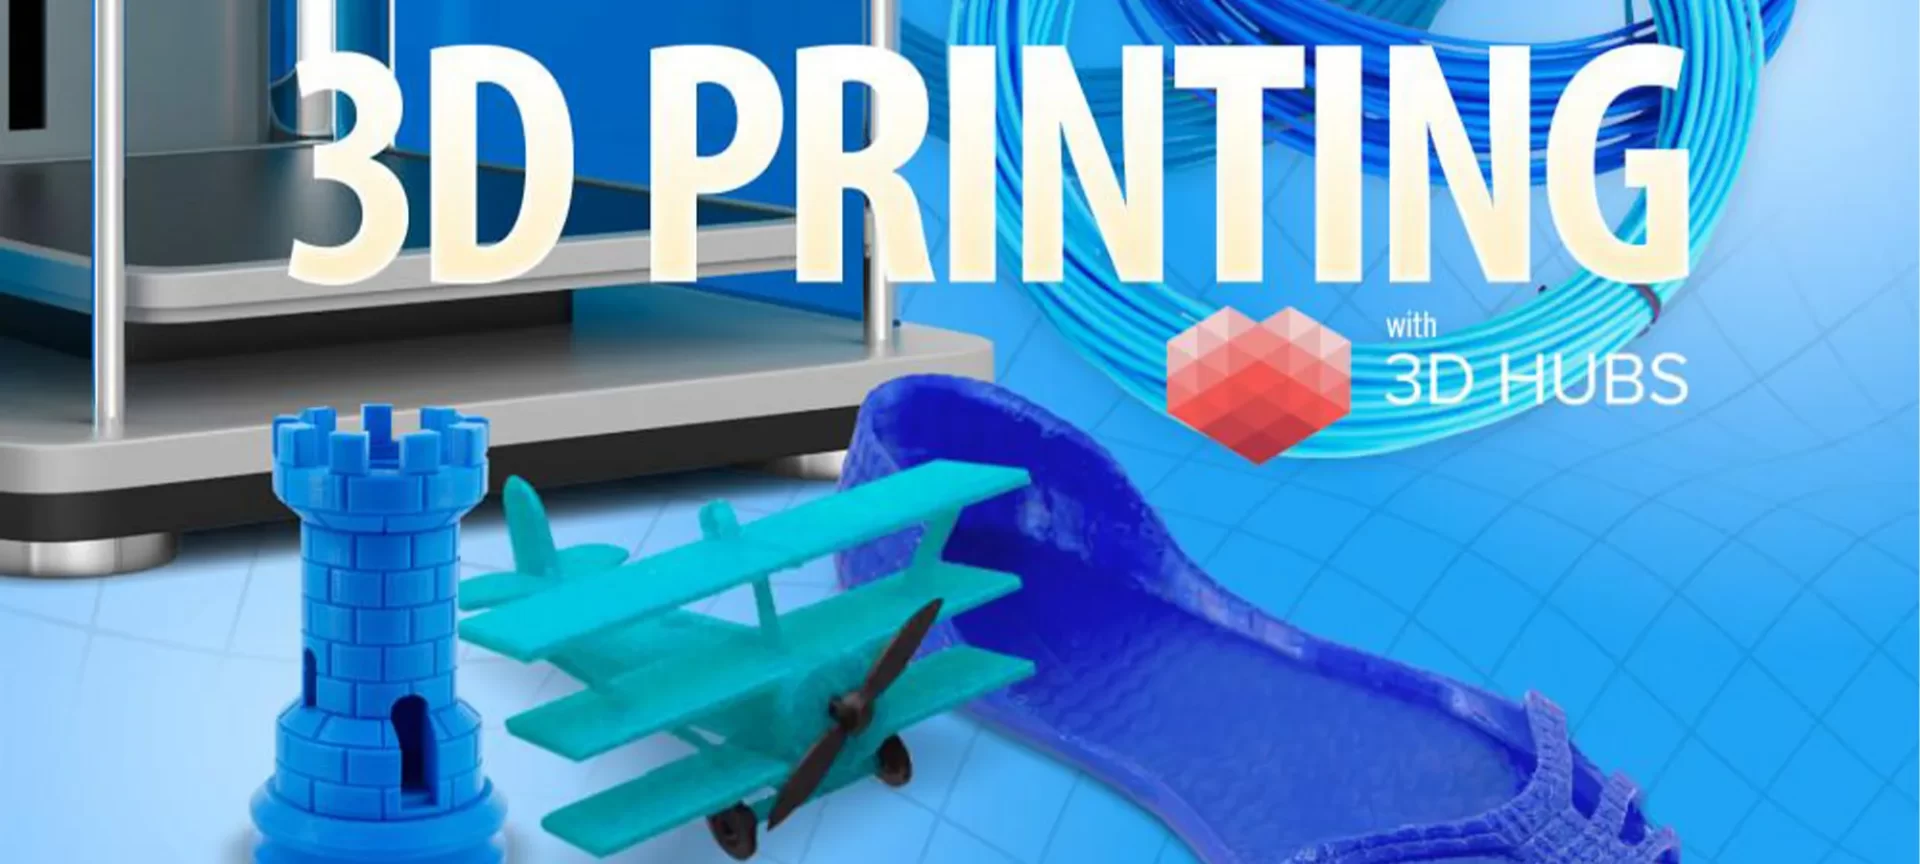 3D hubs 3D printing